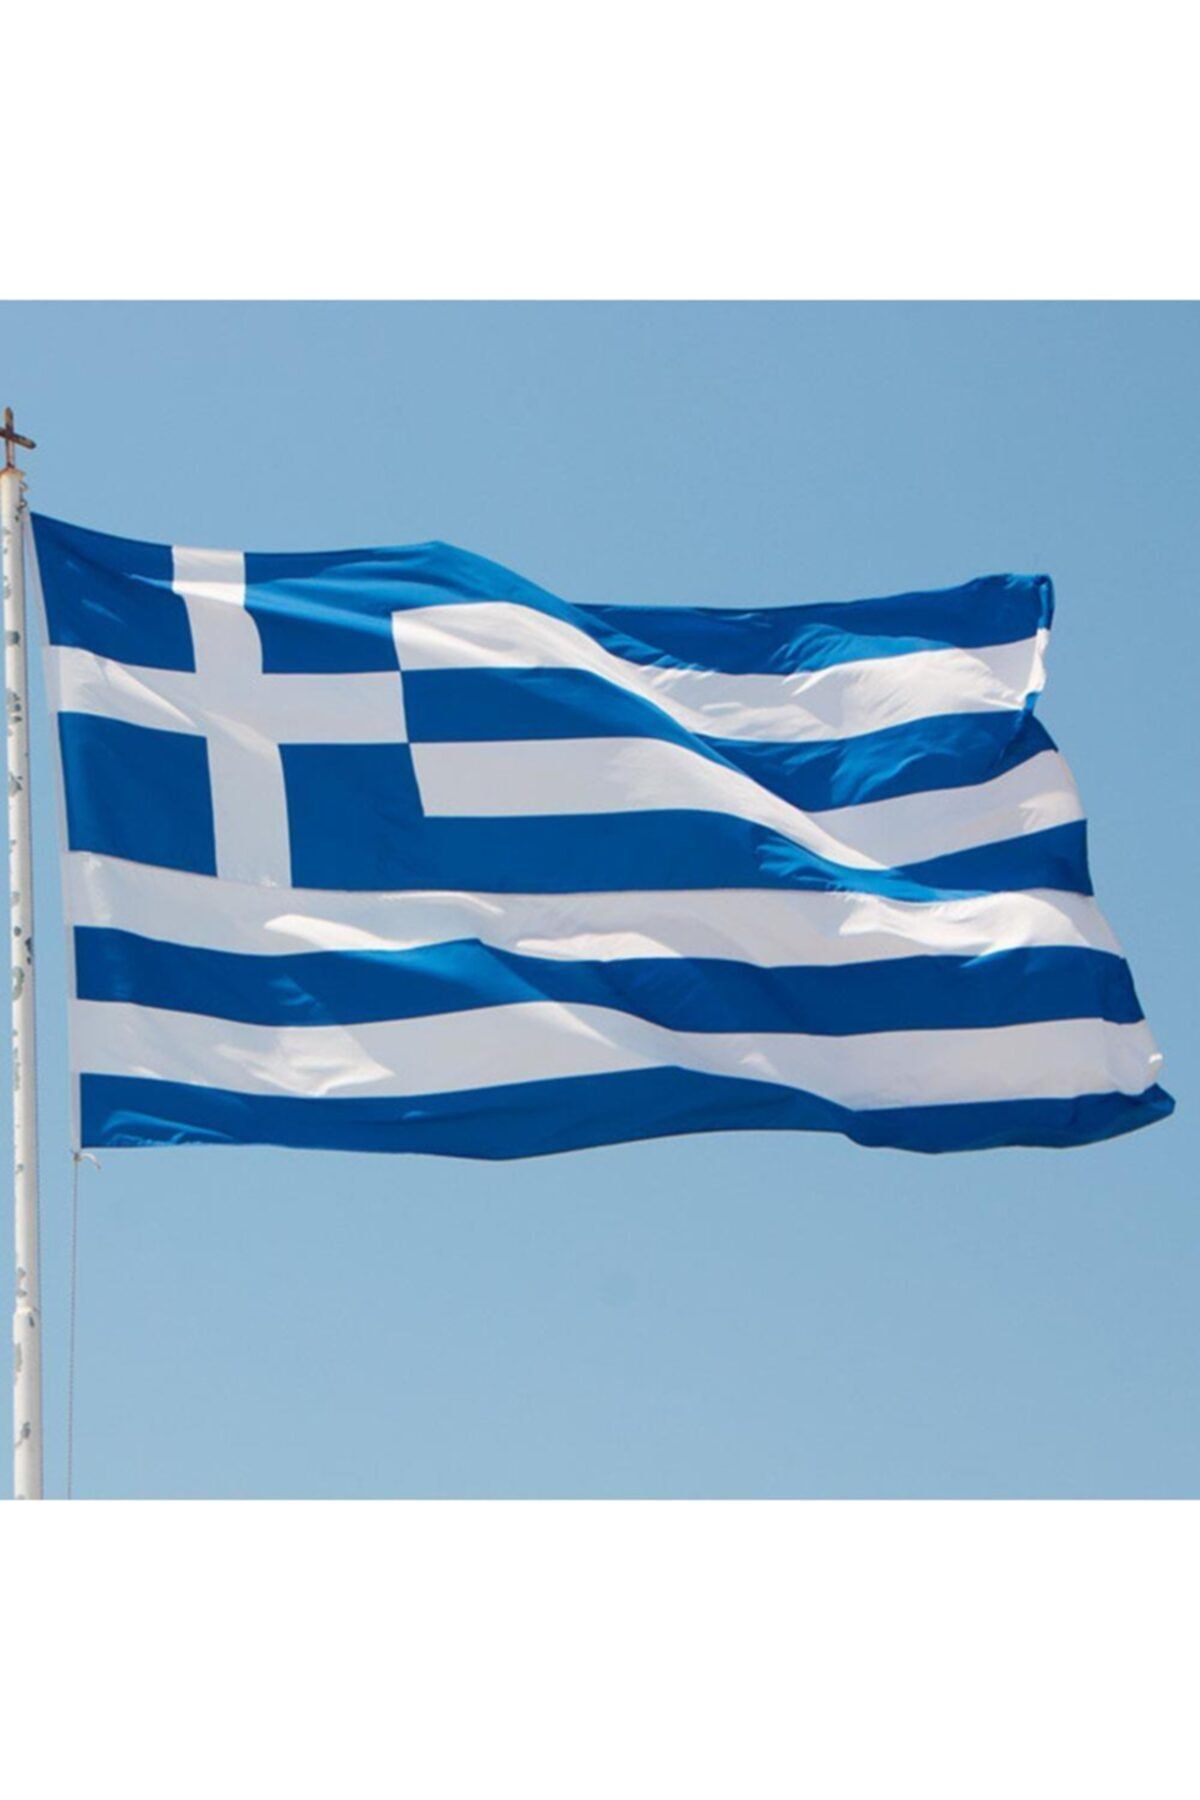 Fors Bayrak Yunanistan Gönder Bayrağı 1.kalite Raşel Kumaş 50x75 Cm